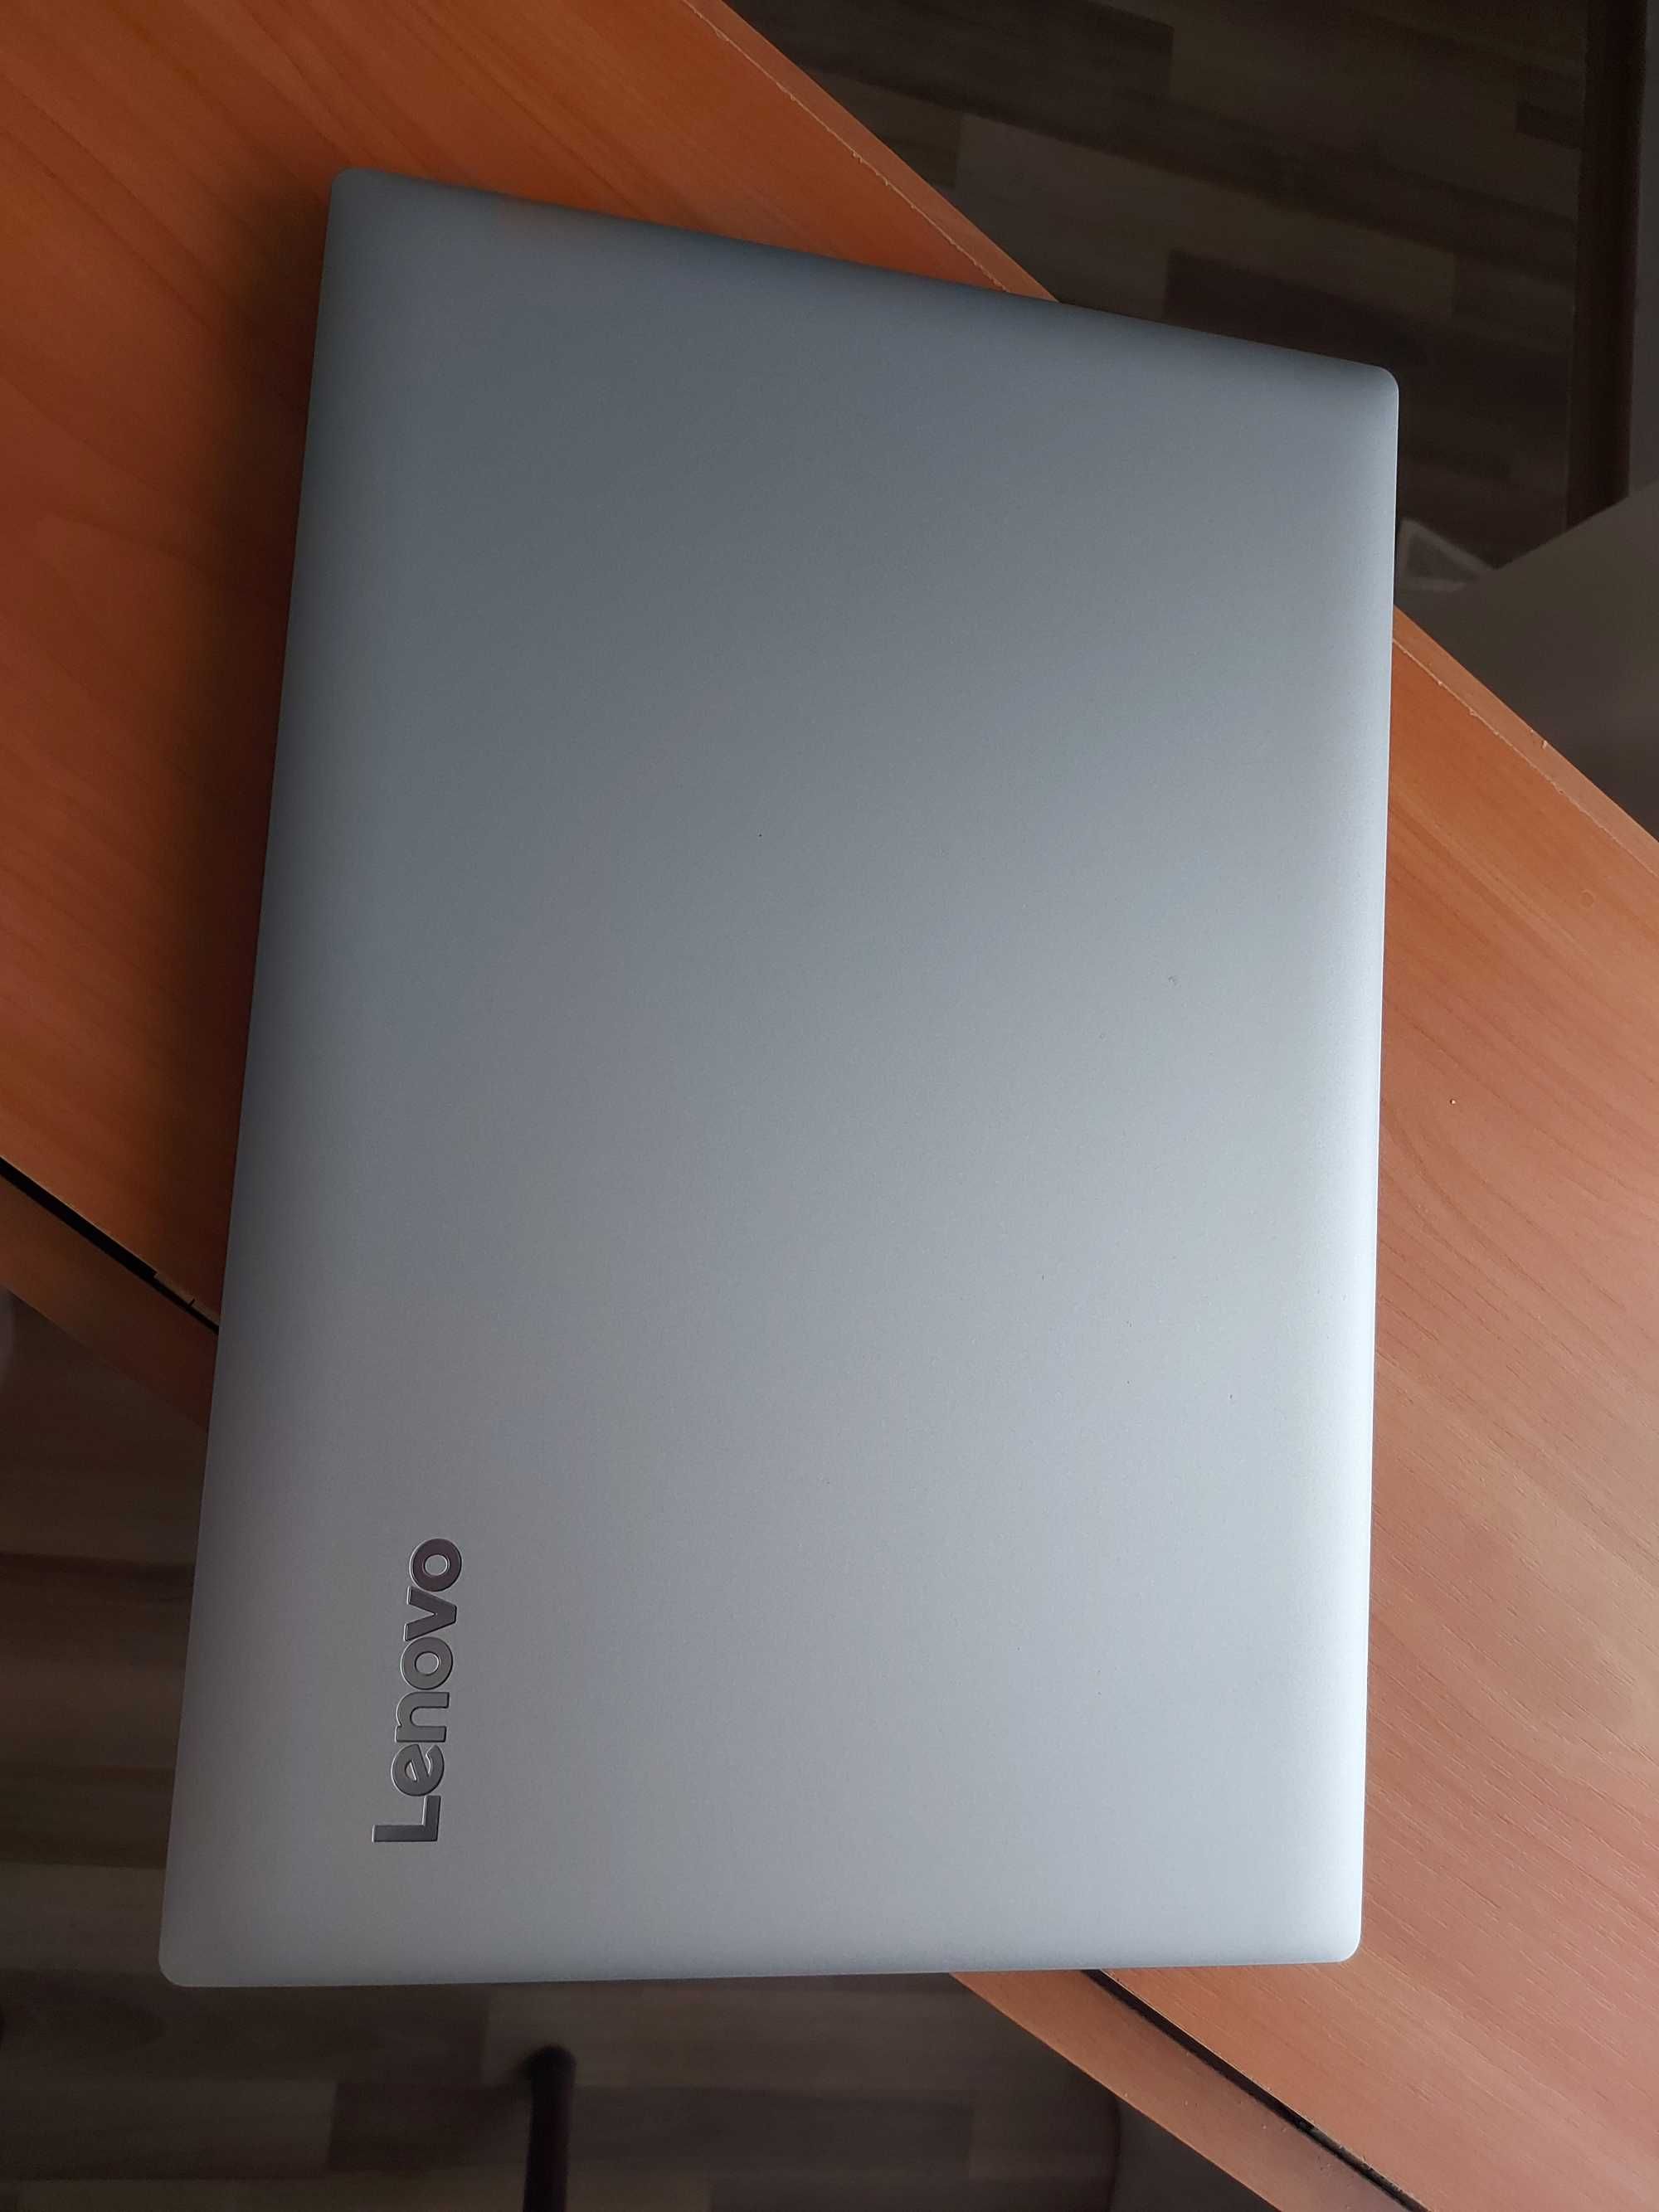 Laptop Lenovo IdeaPad 330